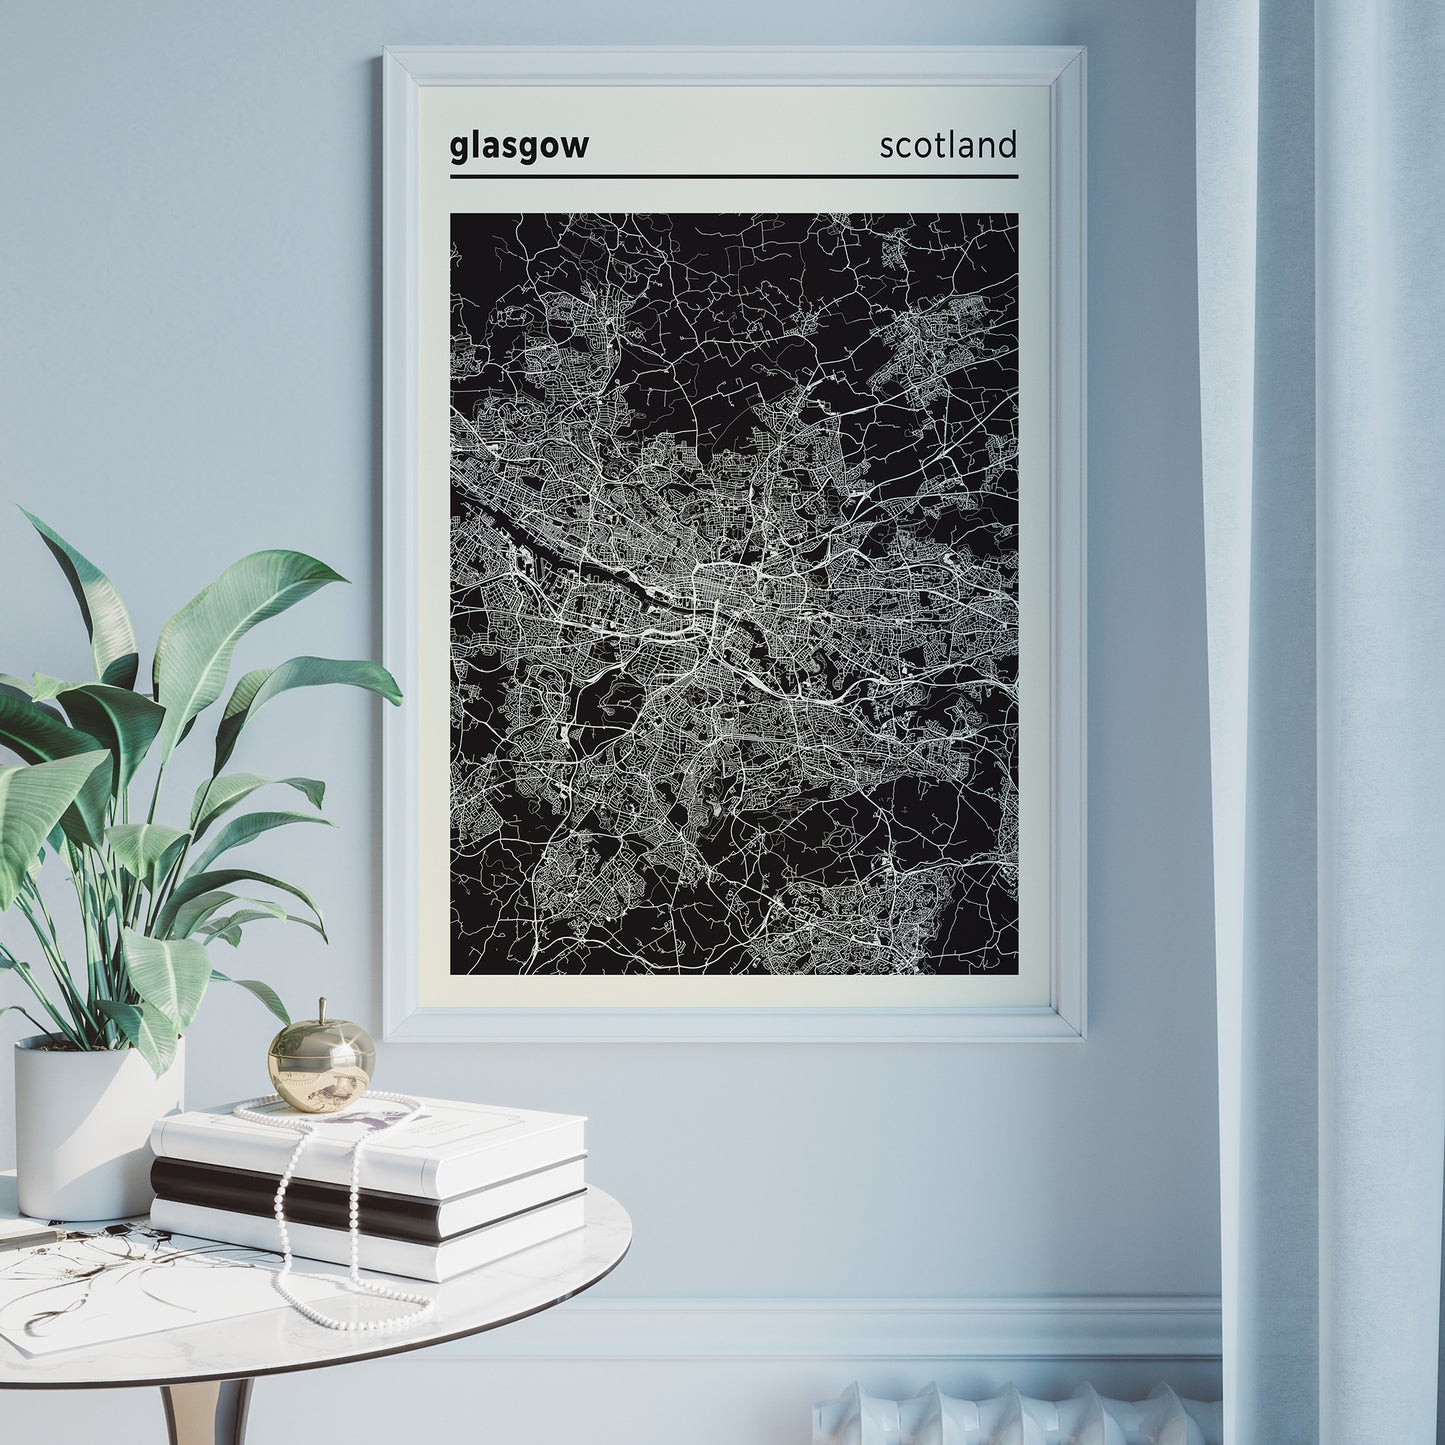 Scotland, Glasgow City Poster - Map Poster